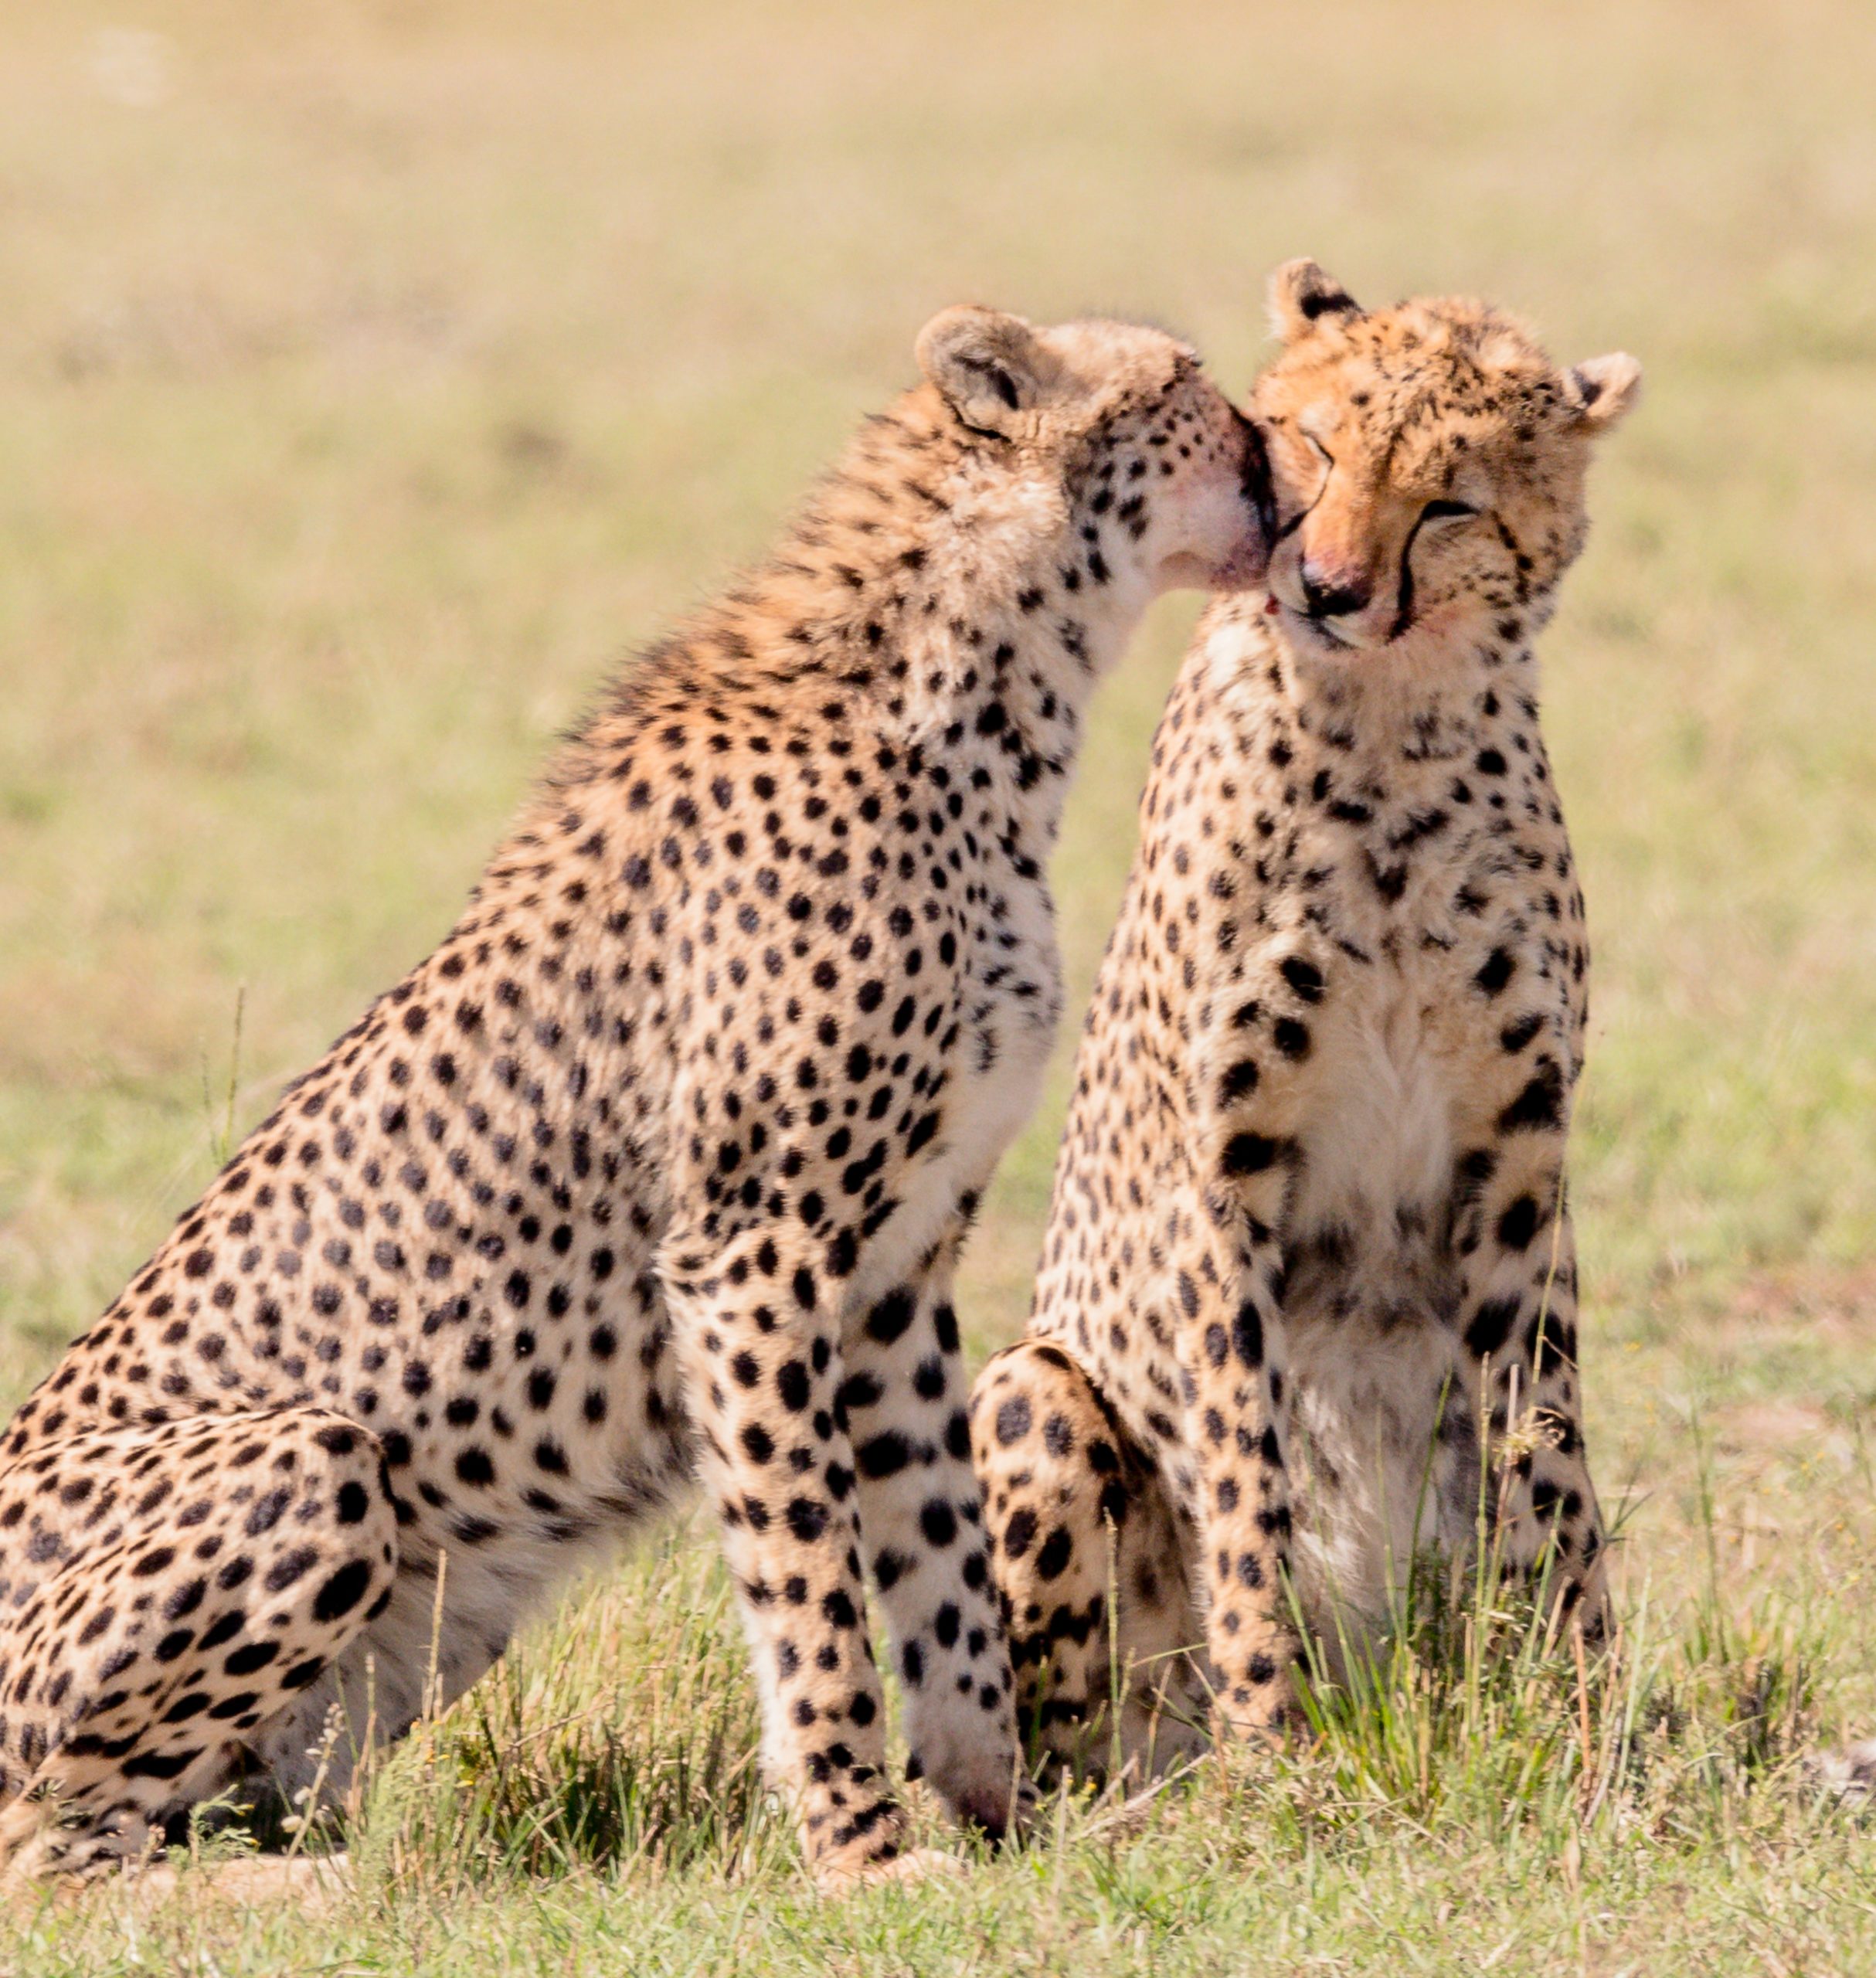 Two Cheetahs groom each other in Masai Mara national reserve kenya